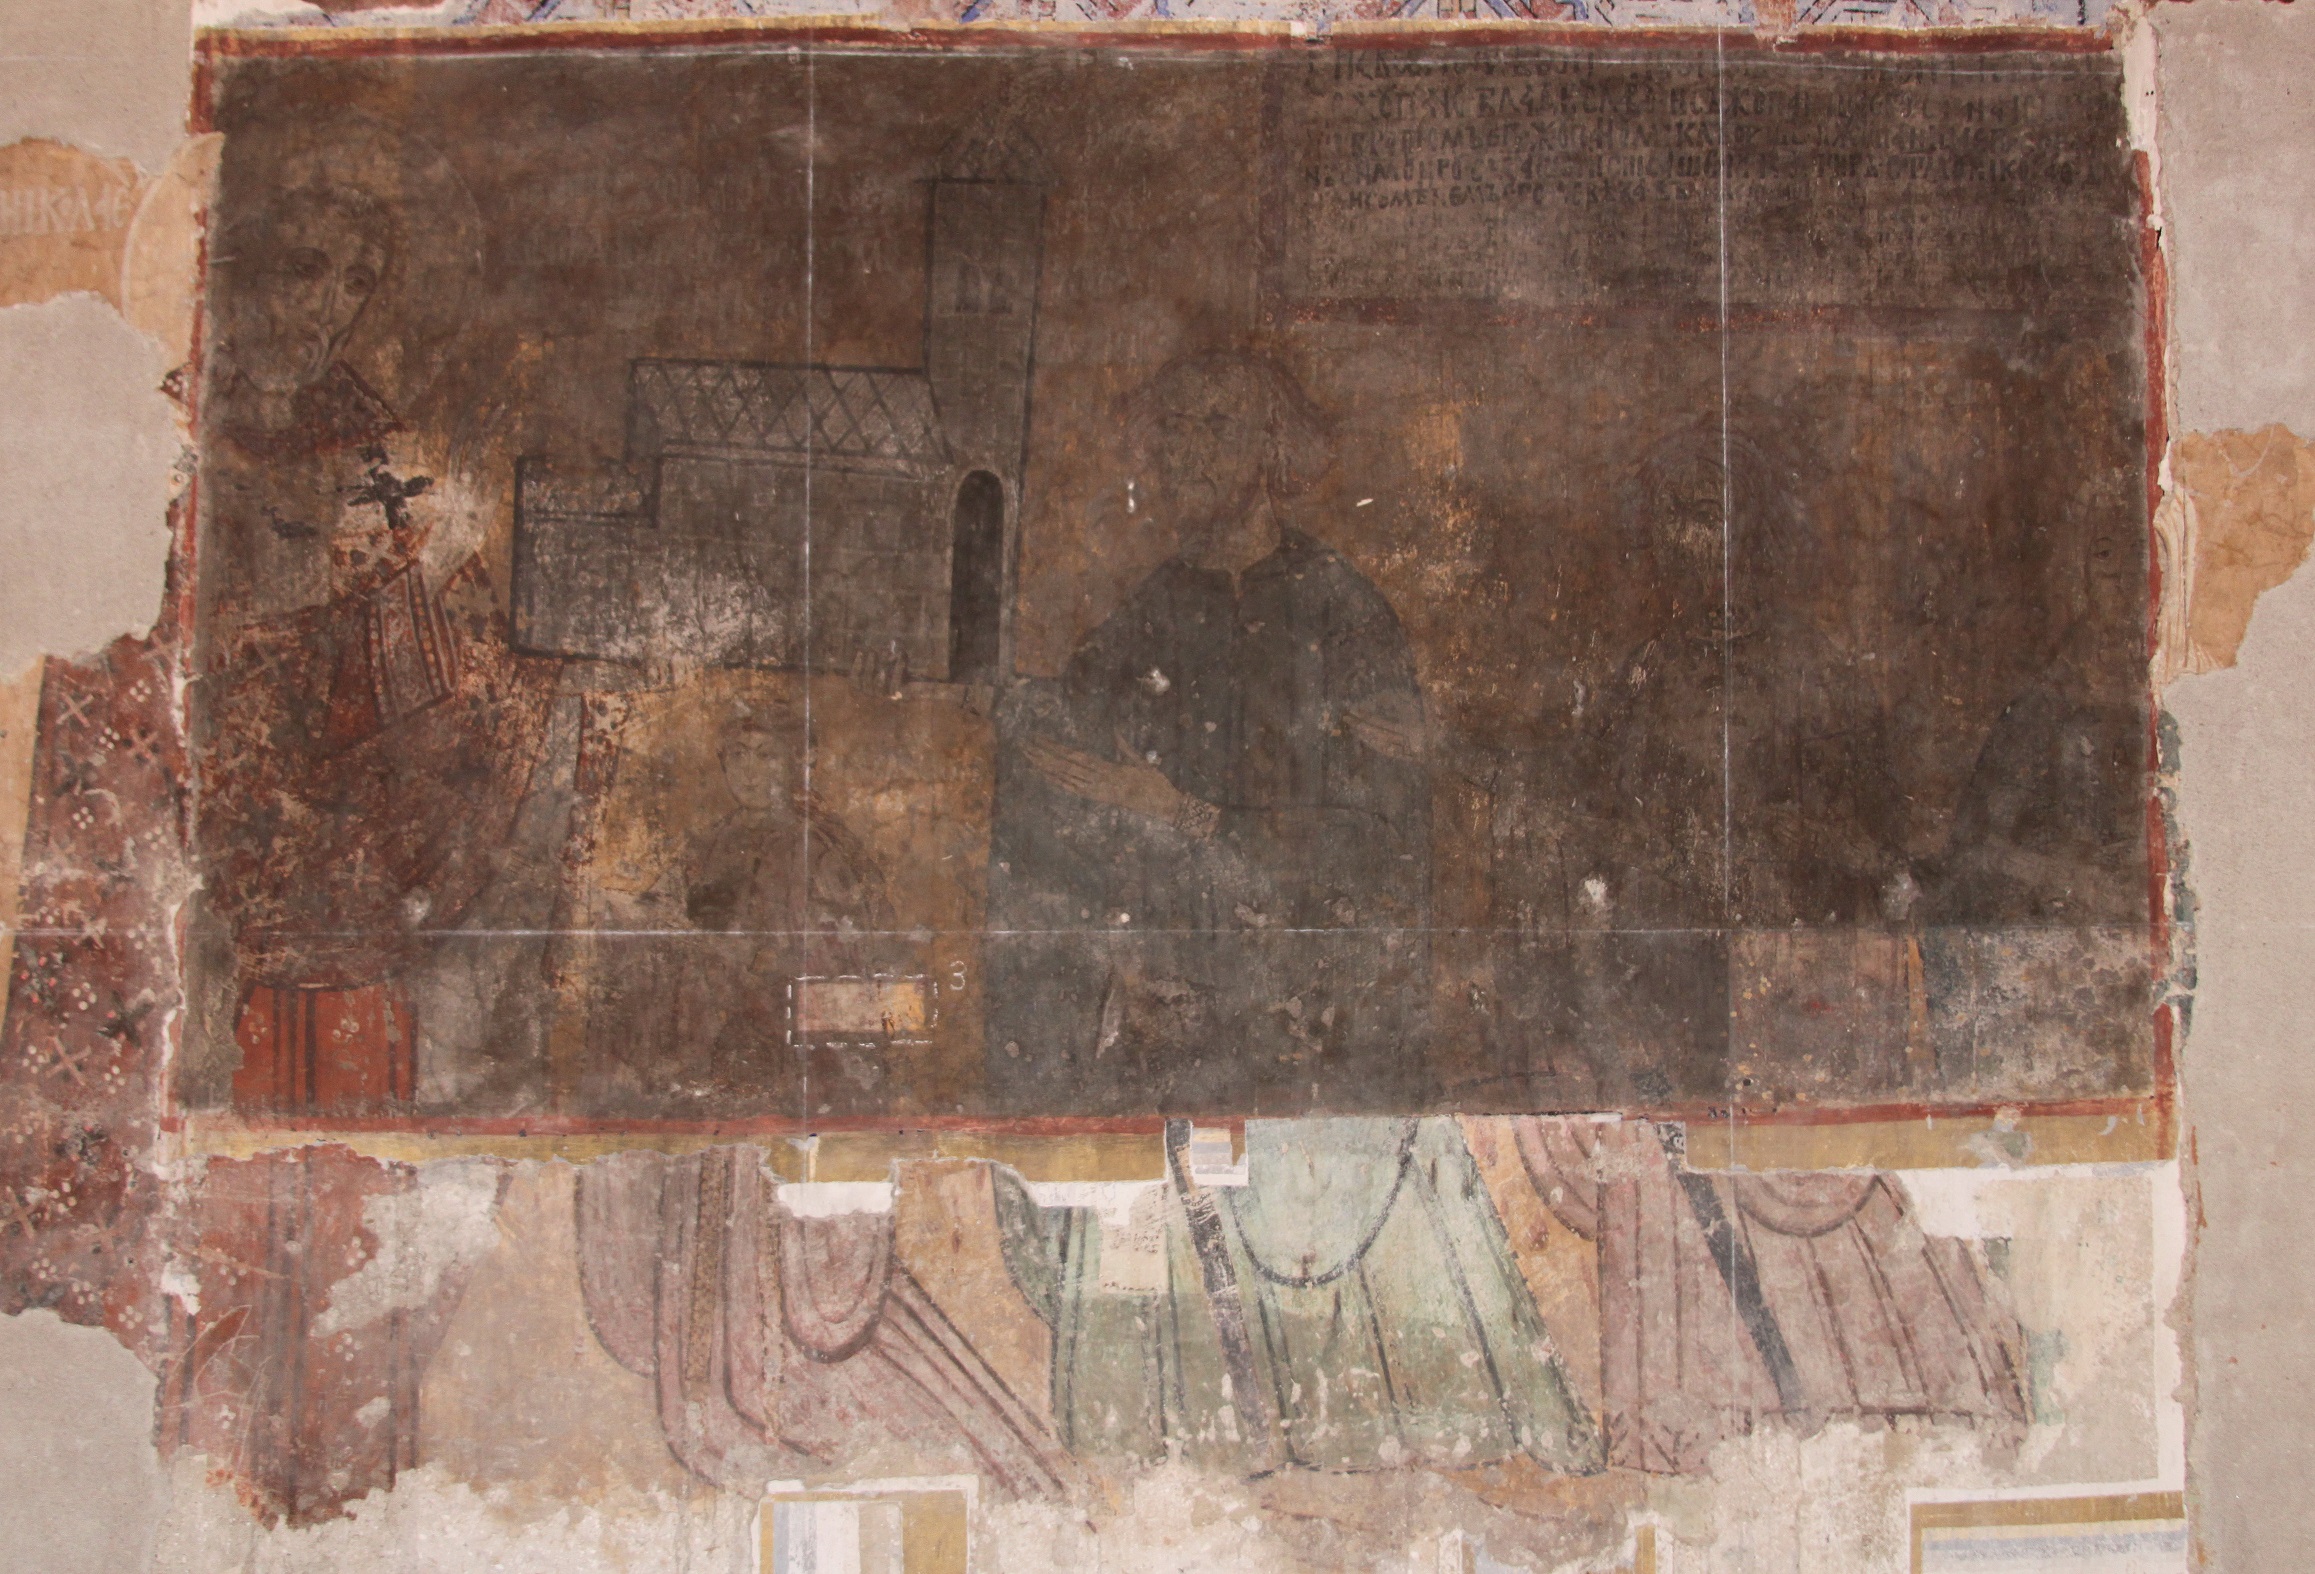 Votive composition, after 1404, fresco, lower register of the nave’s southern wall, Church of St. Nicholas in Ribița, Hunedoara County, Romania (source: D. Gh. Năstăsoiu)